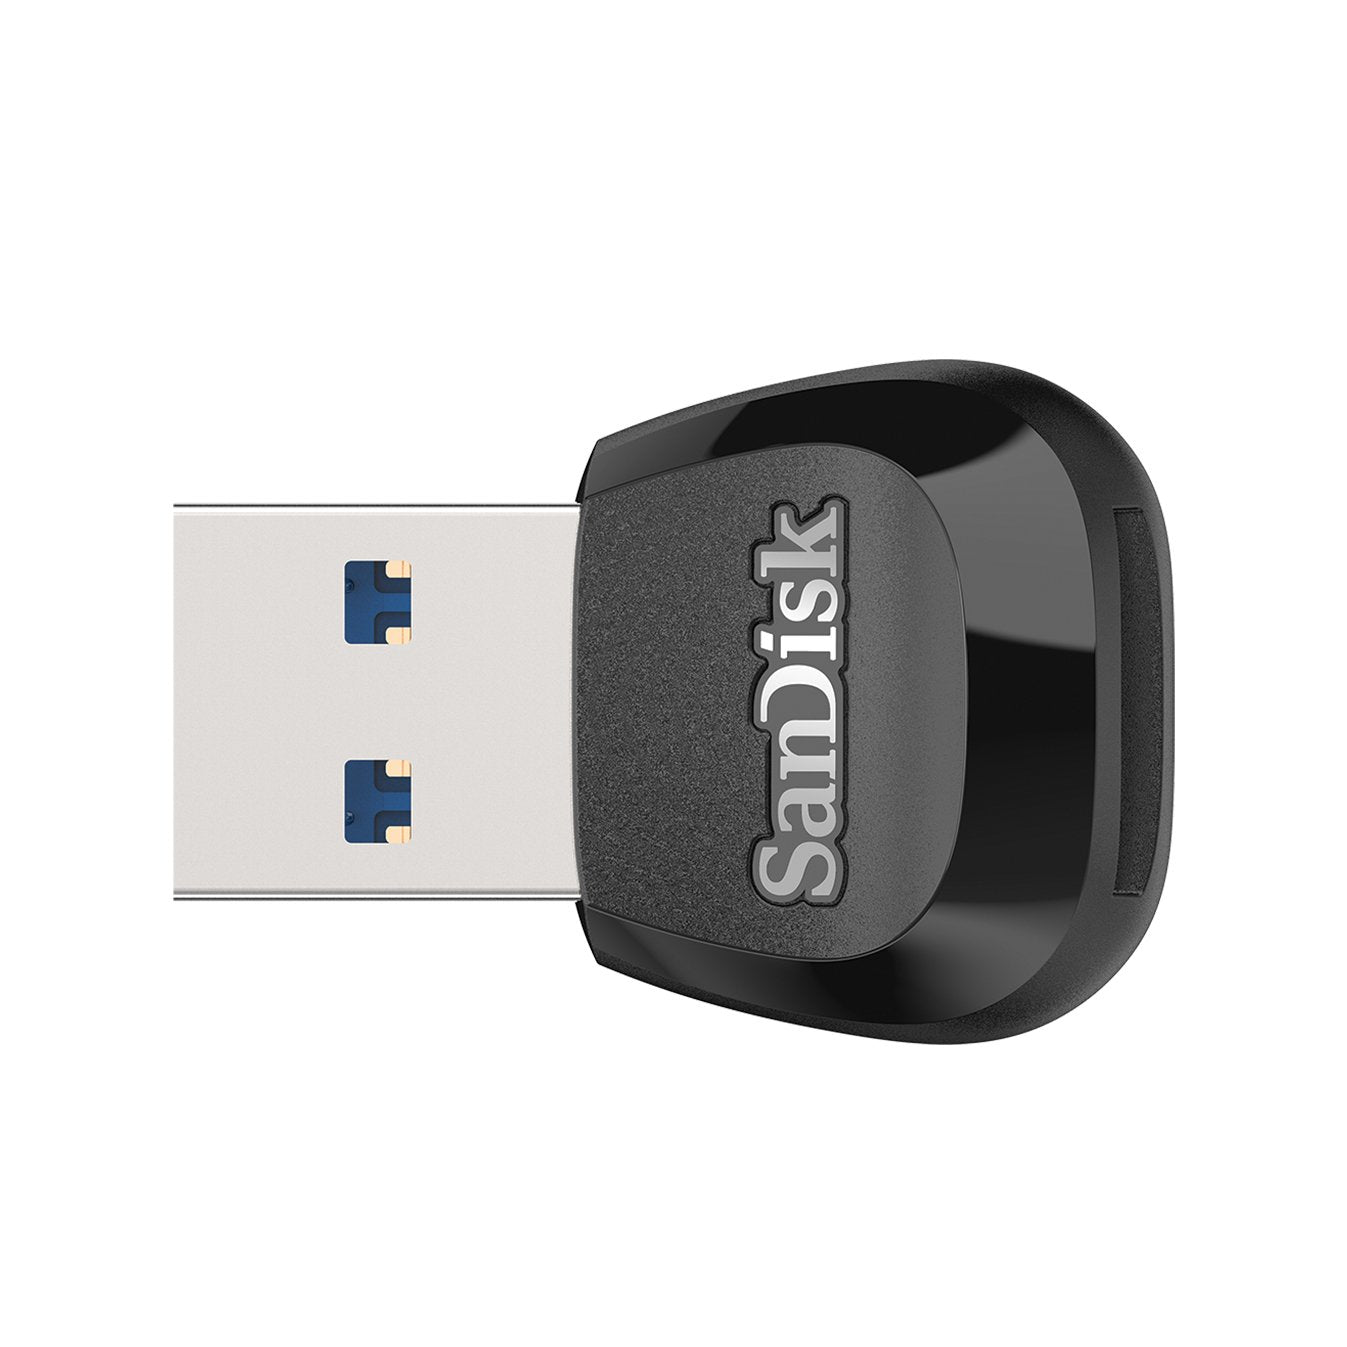 SanDisk MobileMate USB 3.0 microSD Card Reader / Writer - SanDisk Singapore Distributor Vector Magnetics Pte Ltd